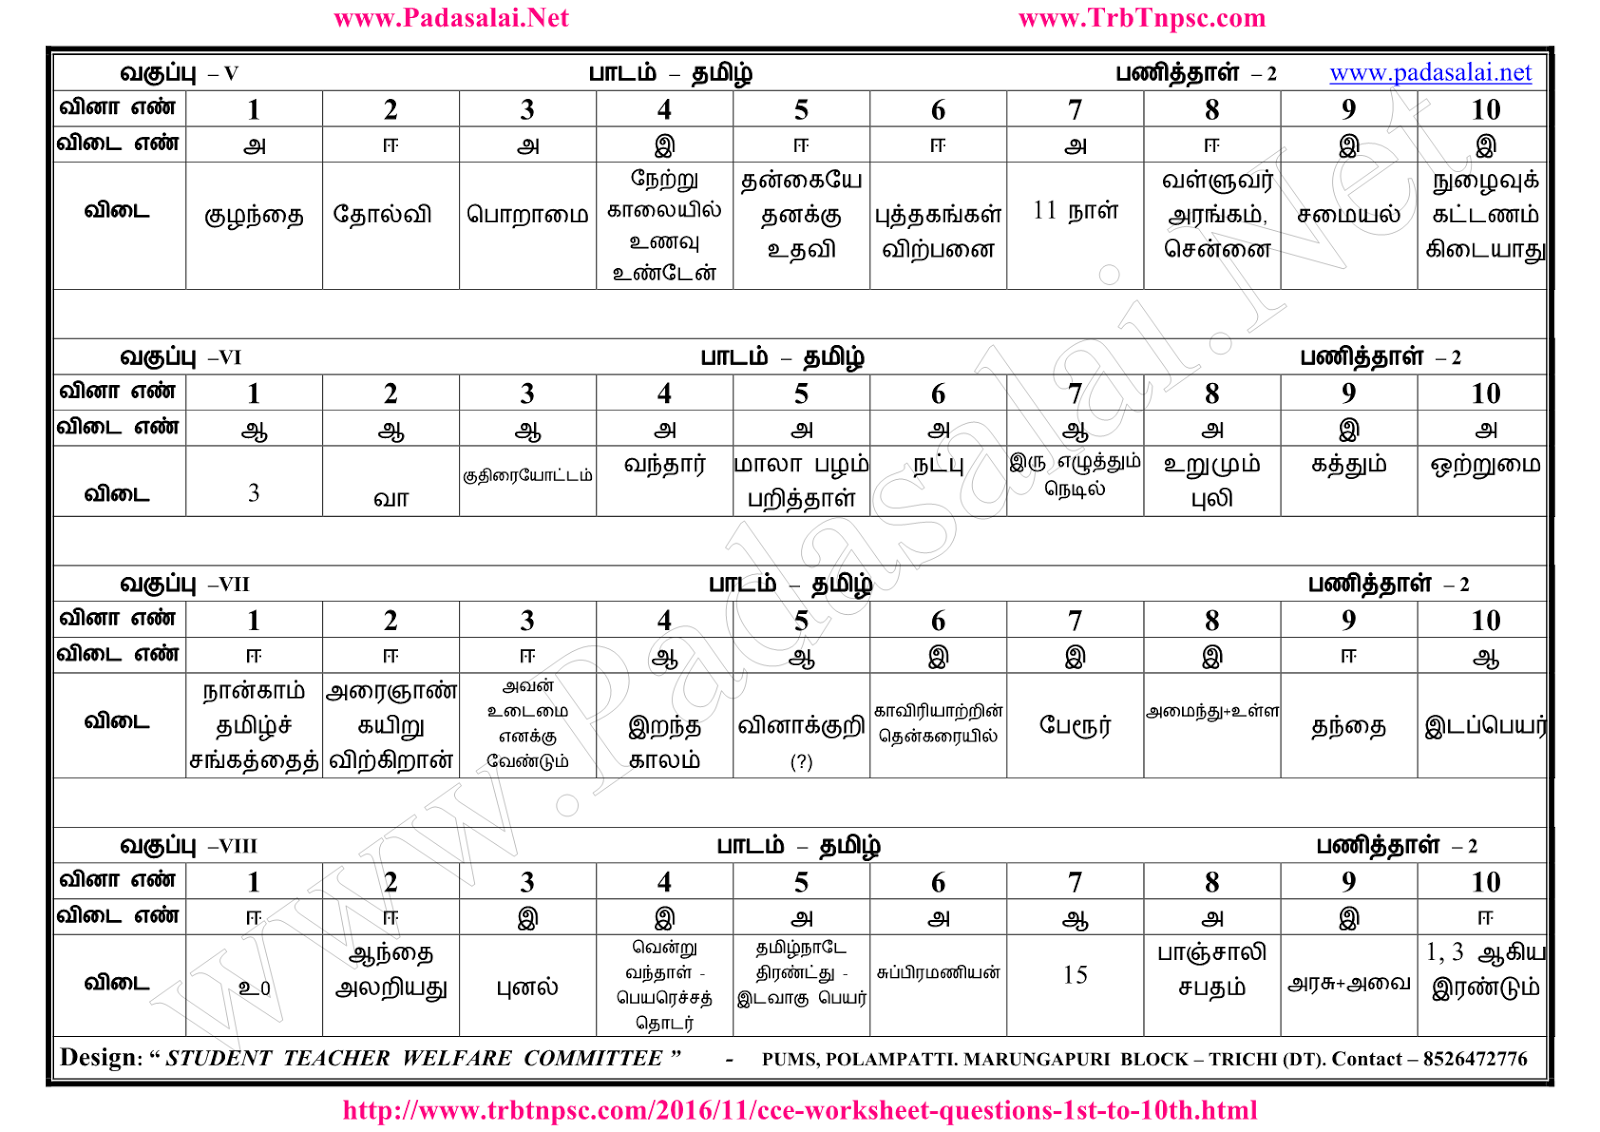 CCE Worksheet 2 - Tamil Question & Answer Keys - பாடசாலை.நெட் Original